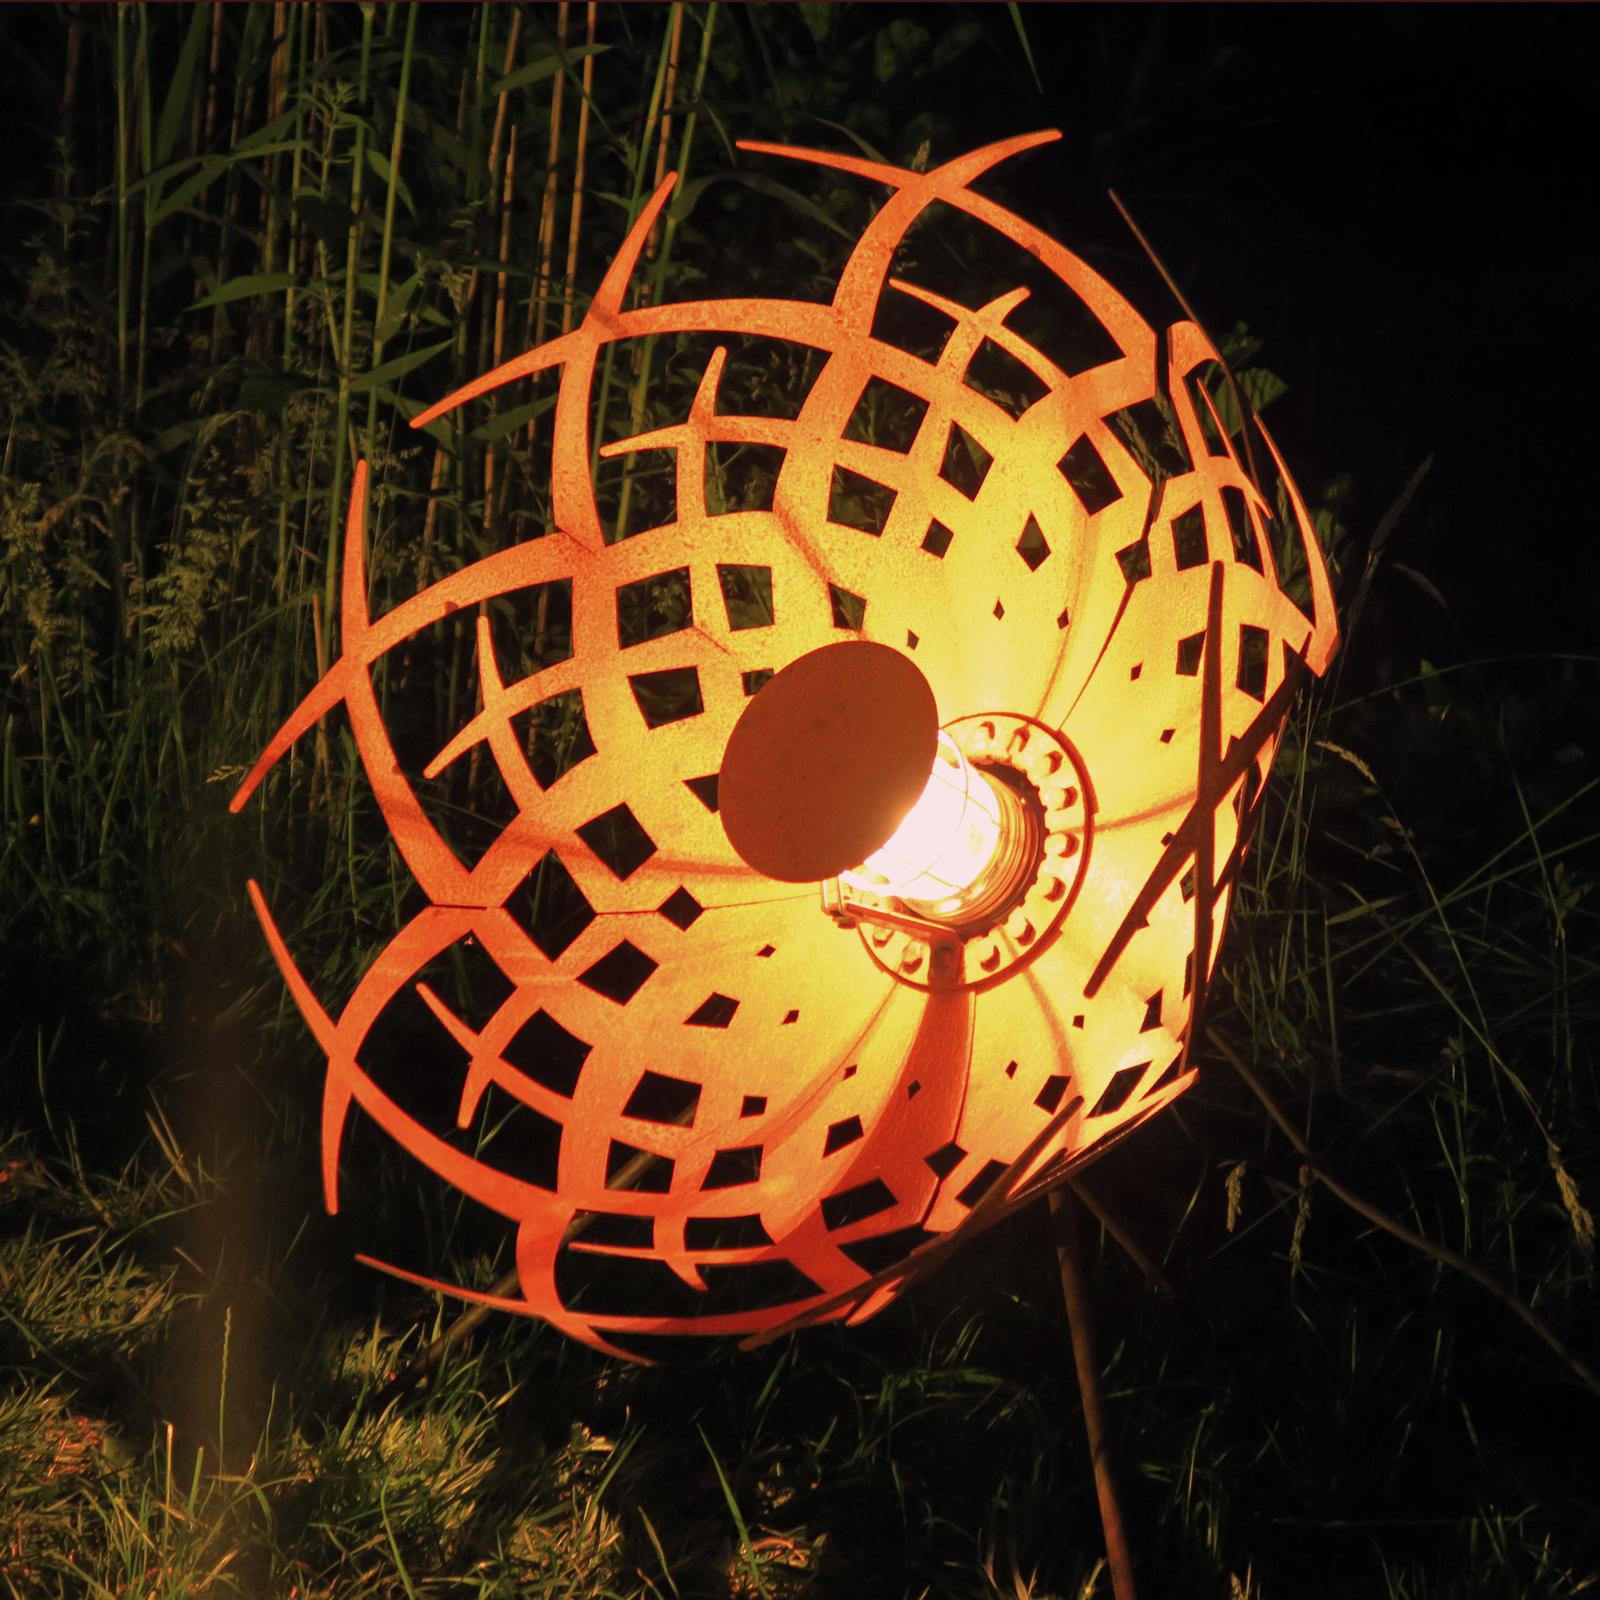 Outdoor Lamp - "Umbrella" - unique rusty ornament - Sculpture by Stefan Traloc